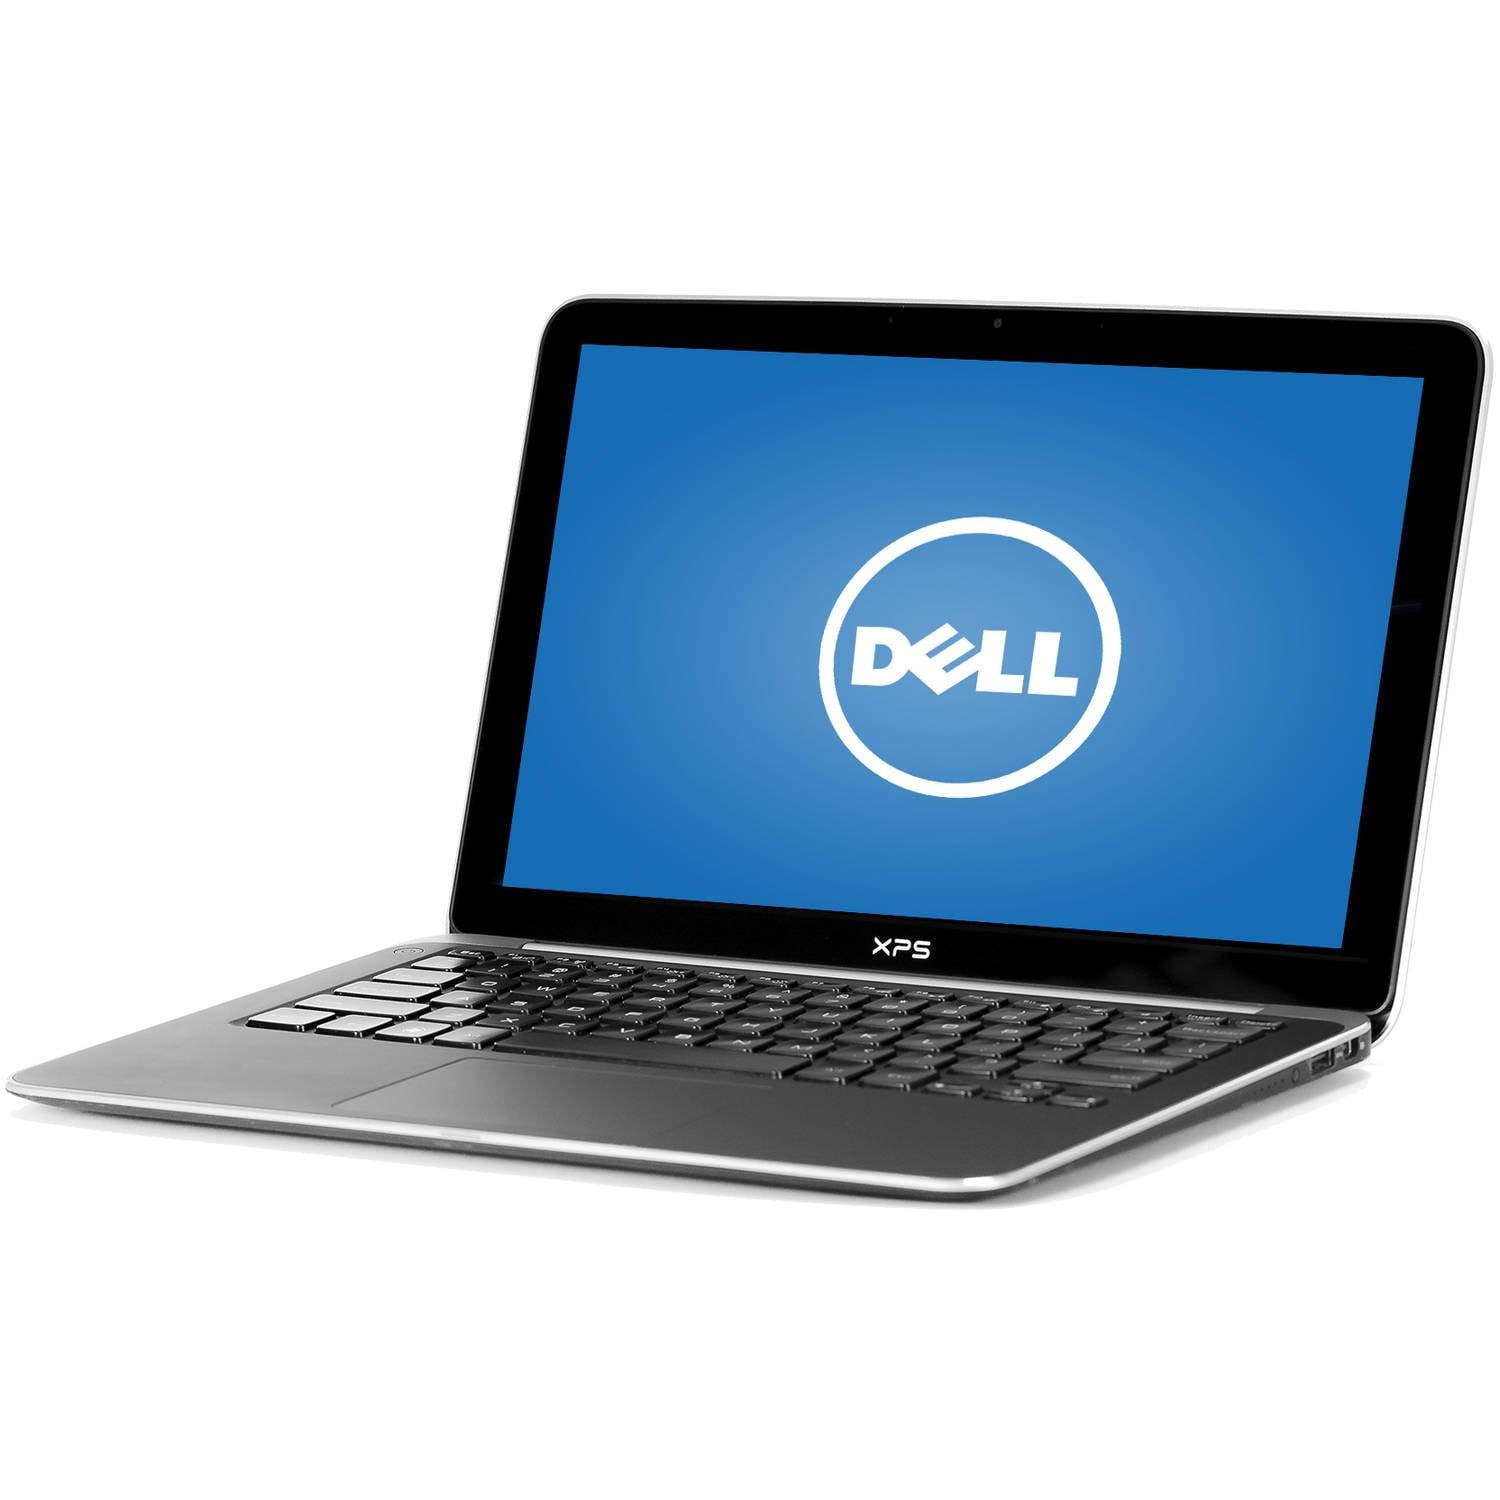 Dell XPS 13 L321X 13.3-in Refurbished Laptop - Intel Core i5 2467M 2nd Gen  1.60 GHz 4GB 128GB SSD Windows 10 - Bluetooth, Webcam, Grade B